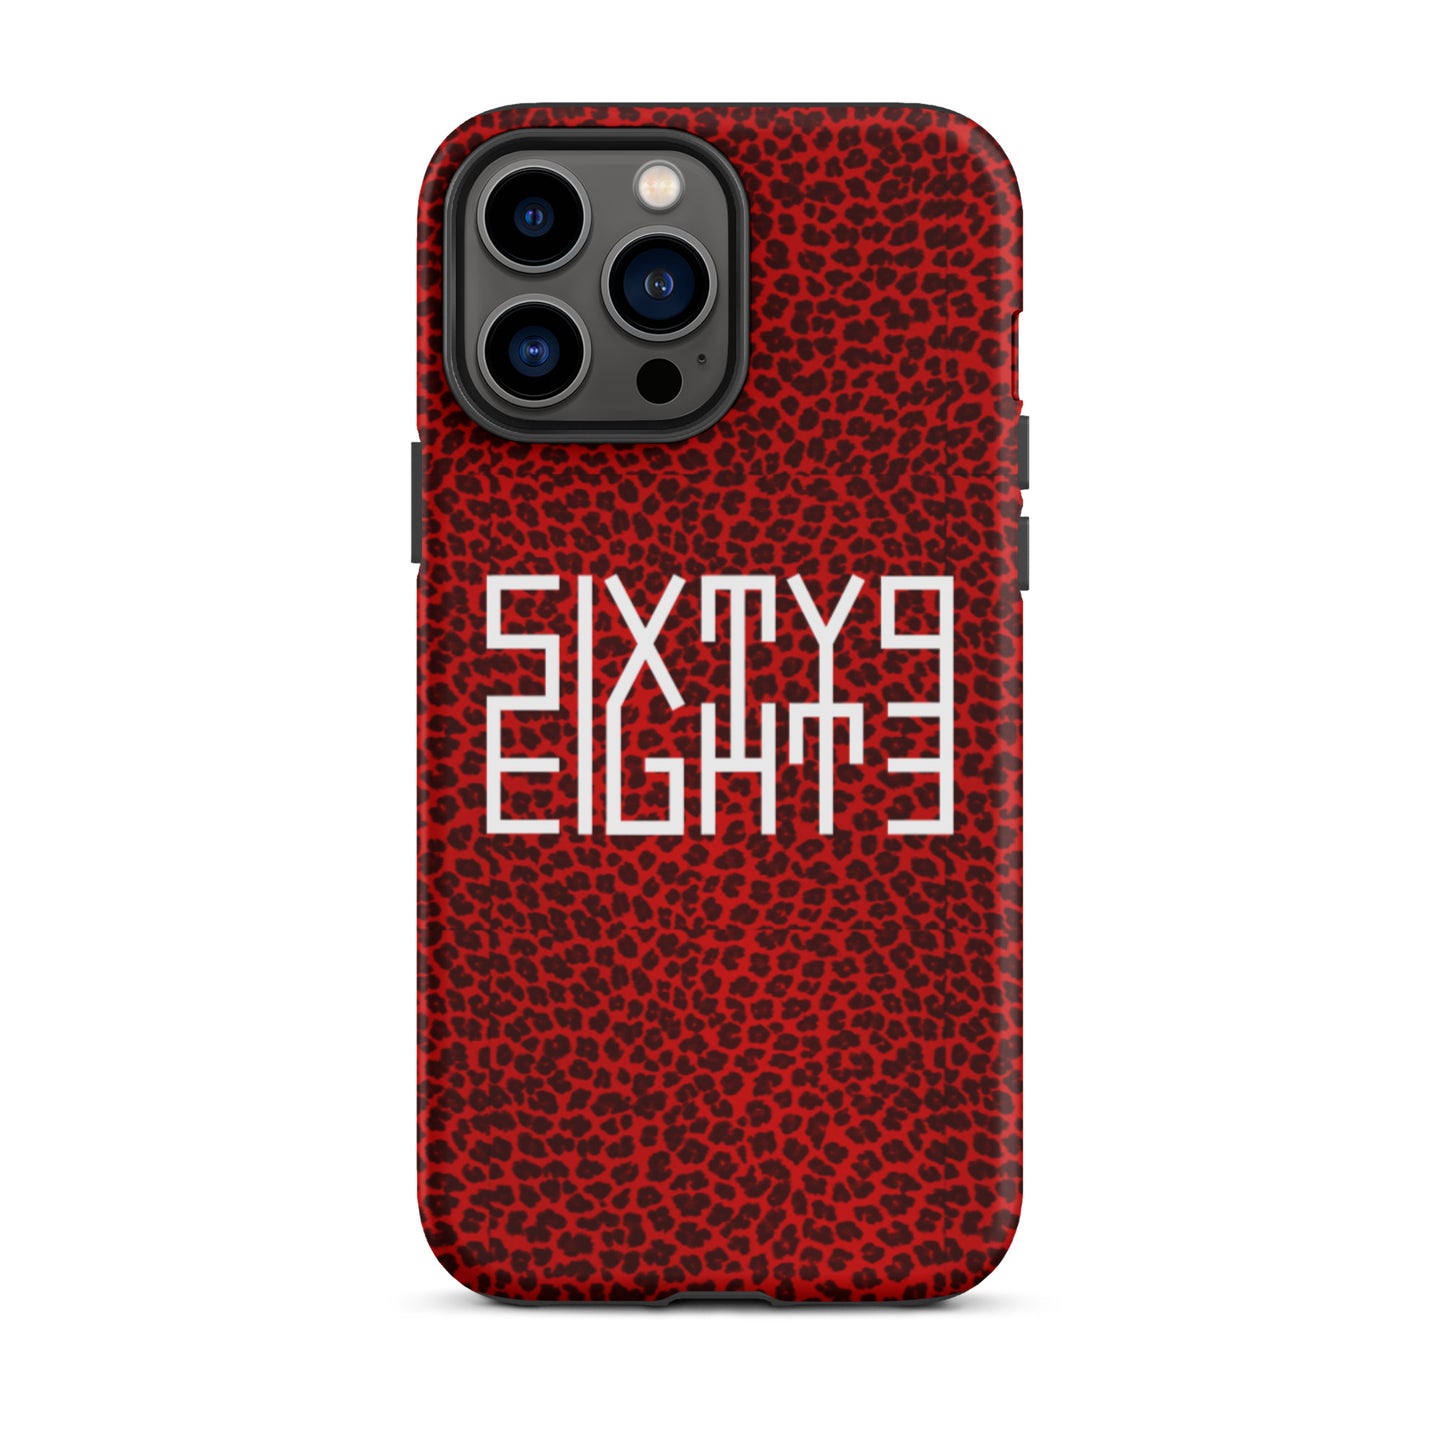 Sixty Eight 93 Logo White Cheetah Red Tough iPhone Case